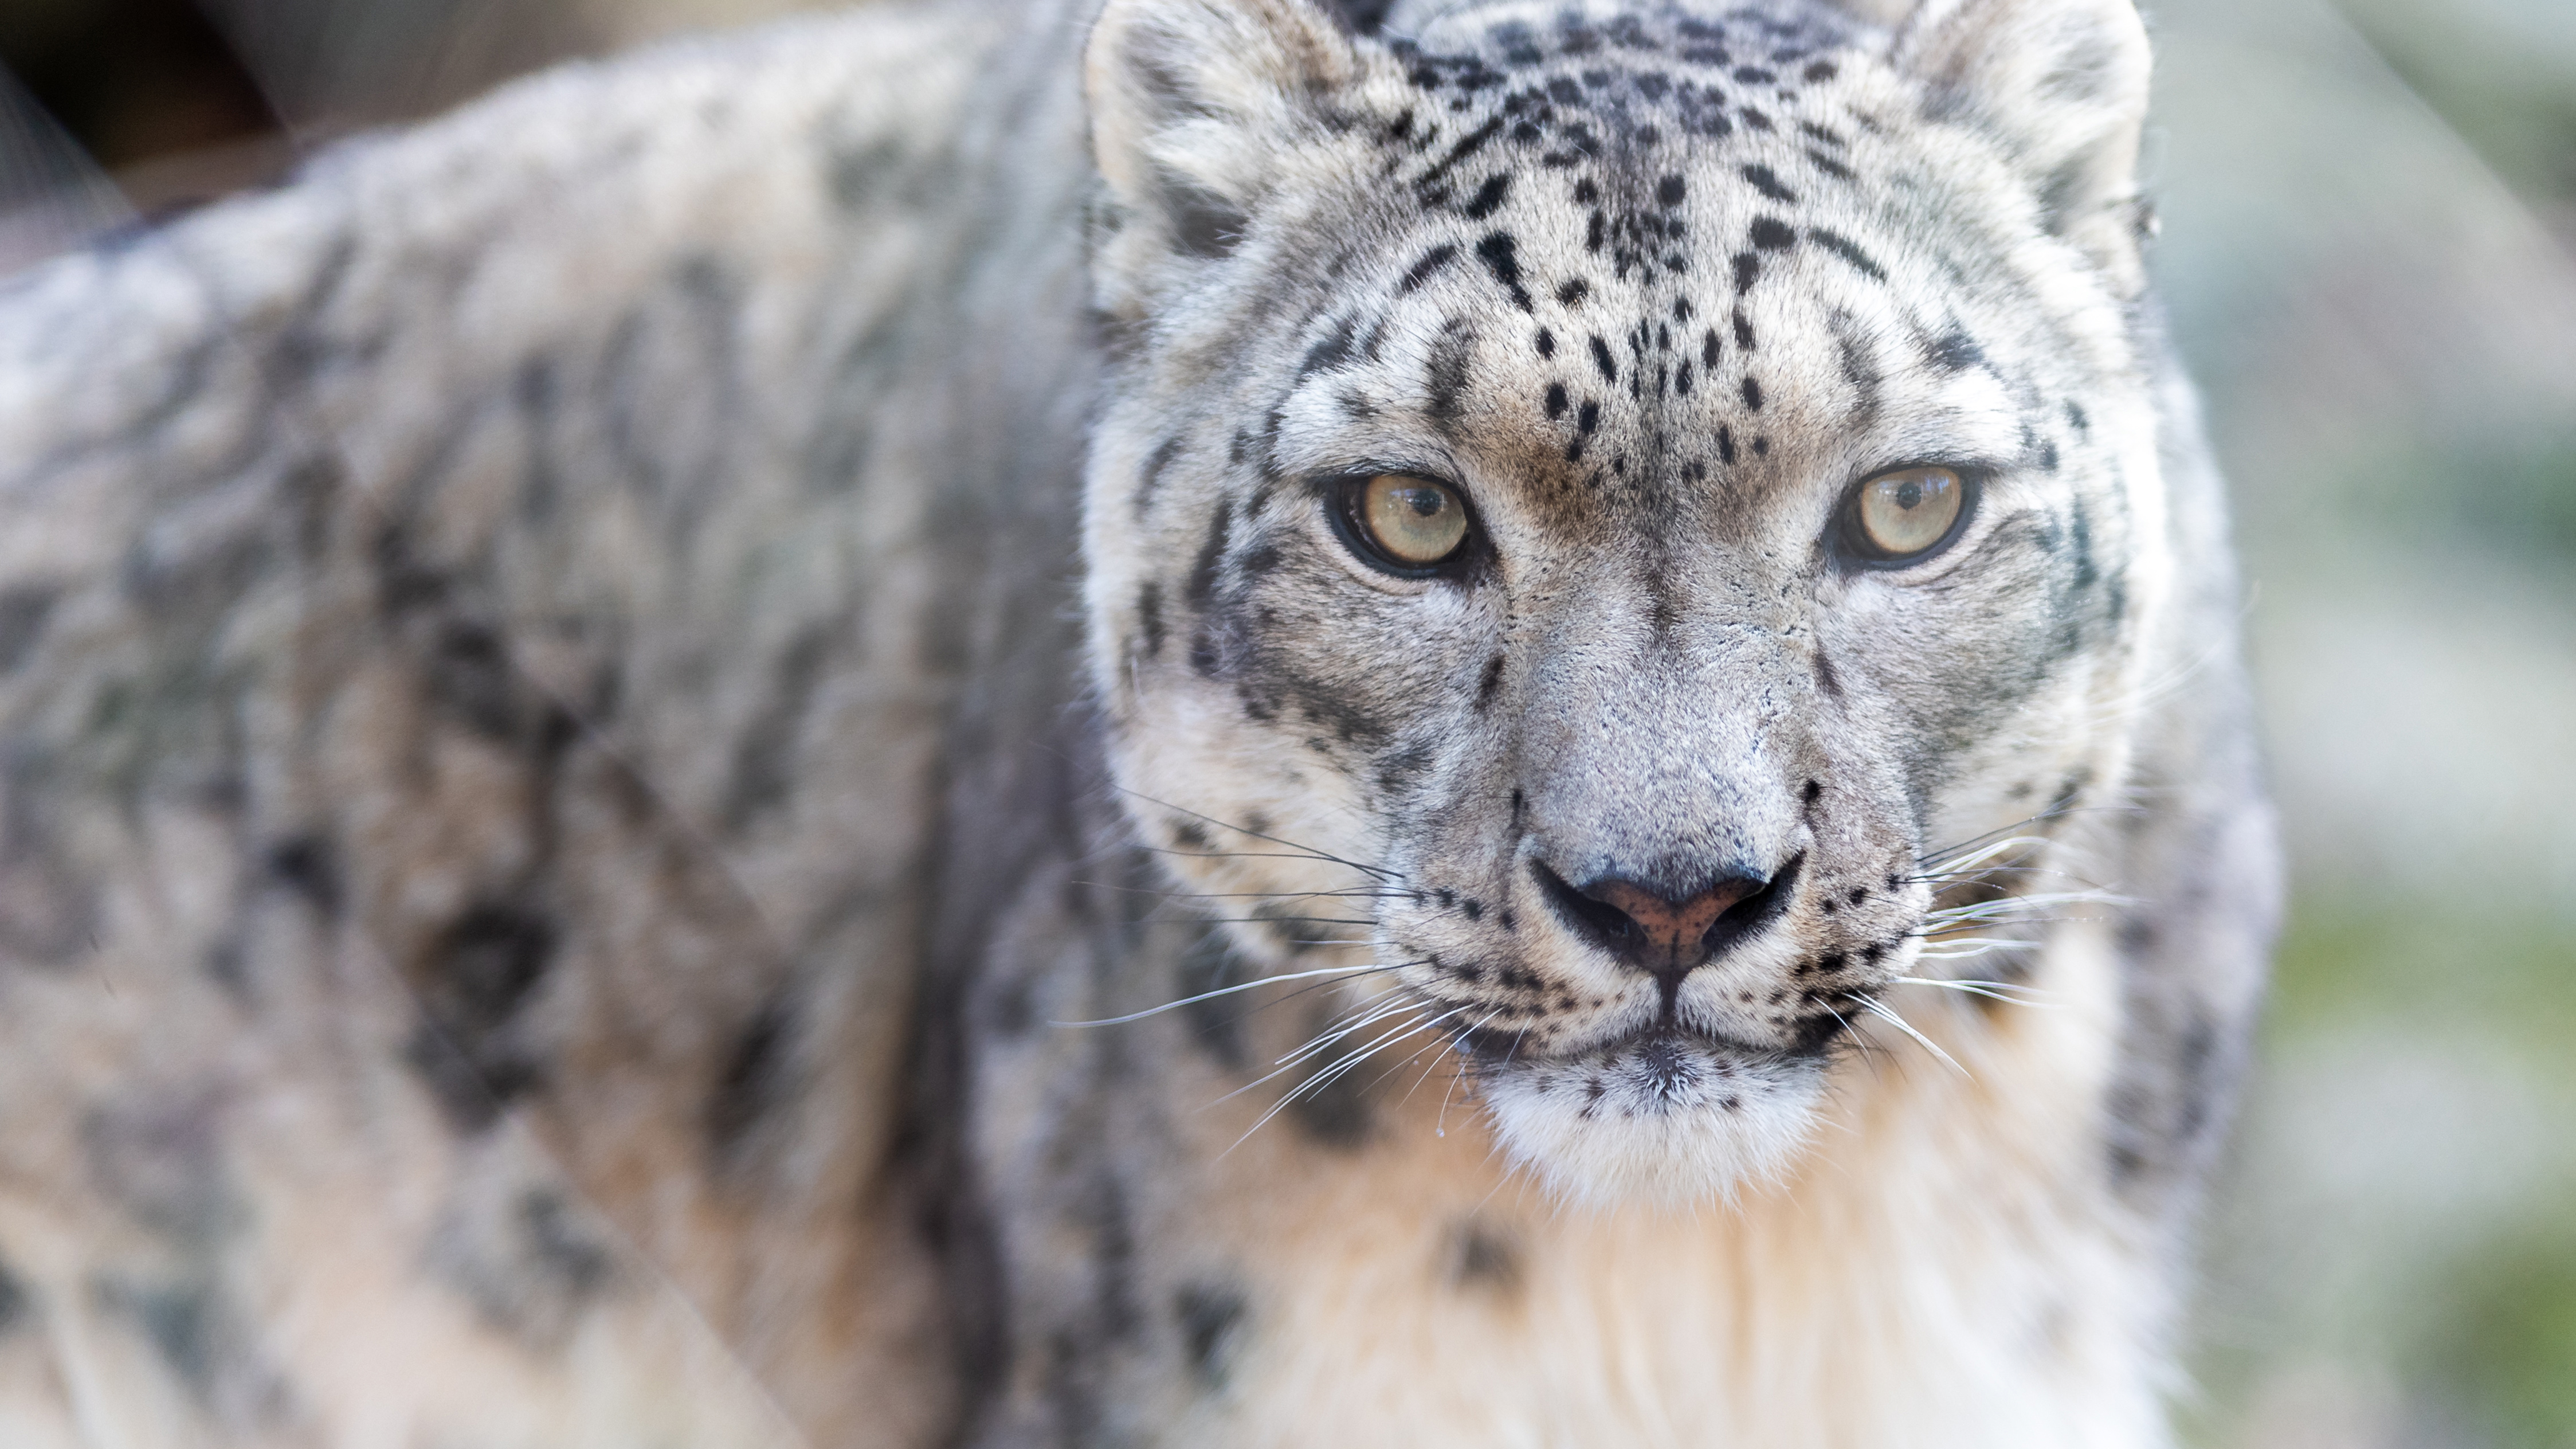 Snow leopard 4K